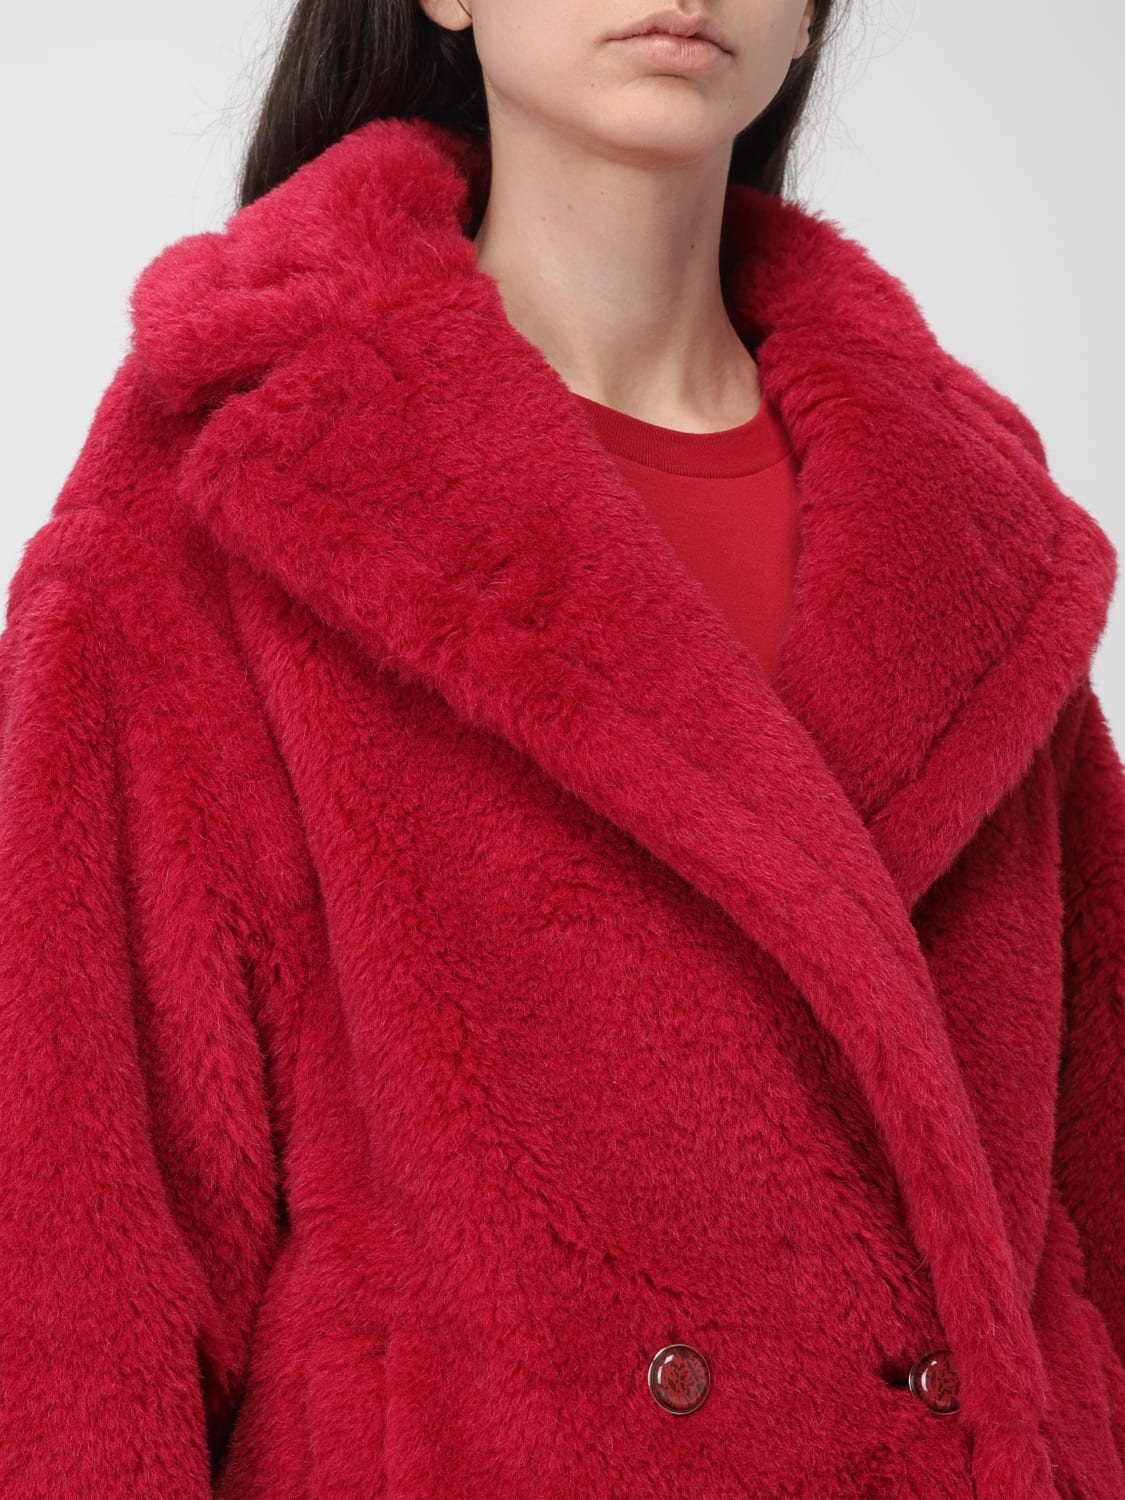 MAX MARA: coat for woman - Red | Max Mara coat 2411081031600 online at ...